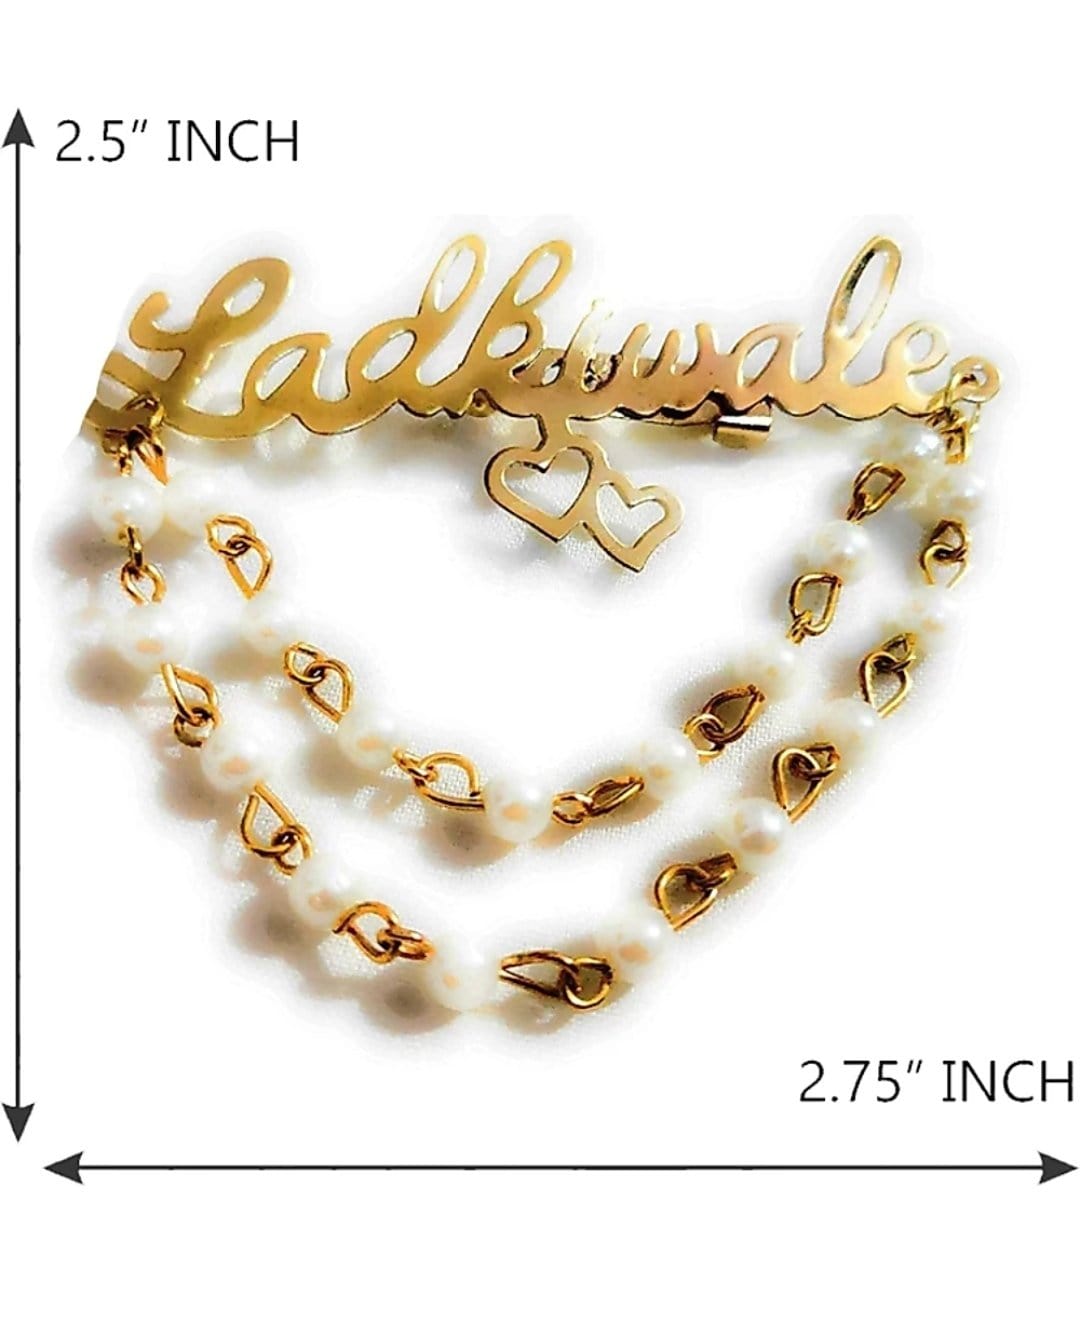 LAMANSH Broaches Gold-White / Metal / 16 LAMANSH® Pack of 16 Ladkiwale Broaches Brooch for Barati in wedding 🎉 / Suitable for Men,Women & Kids in Shaadi